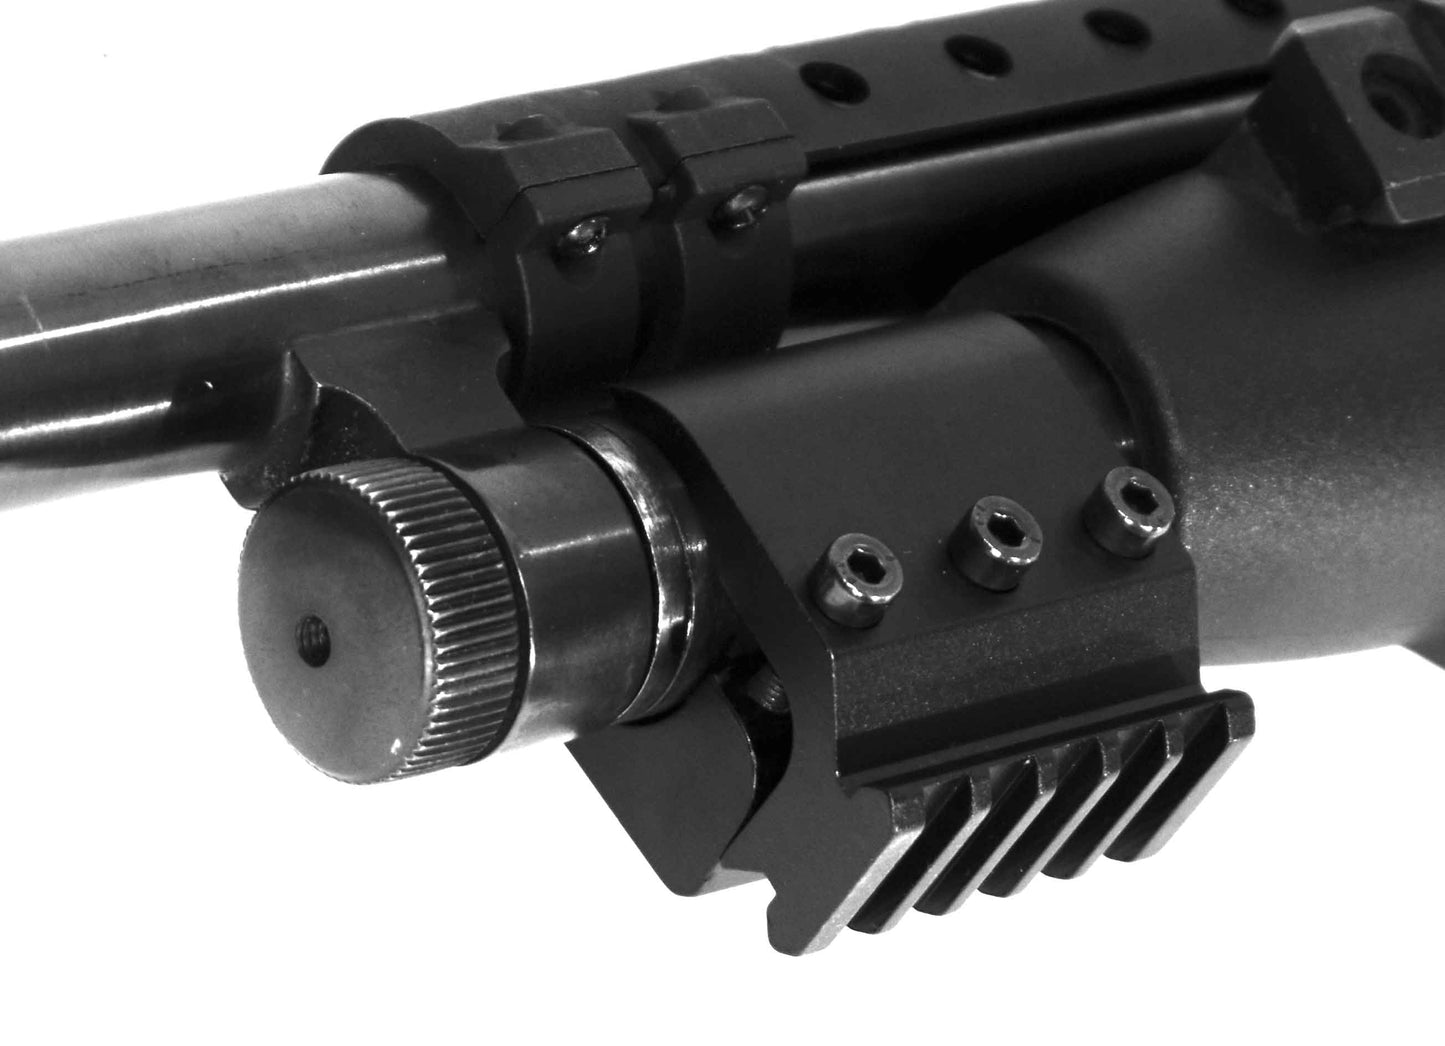 Mossberg maverick 88 20 gauge pump tactical flashlight with mount aluminum black hunting light.